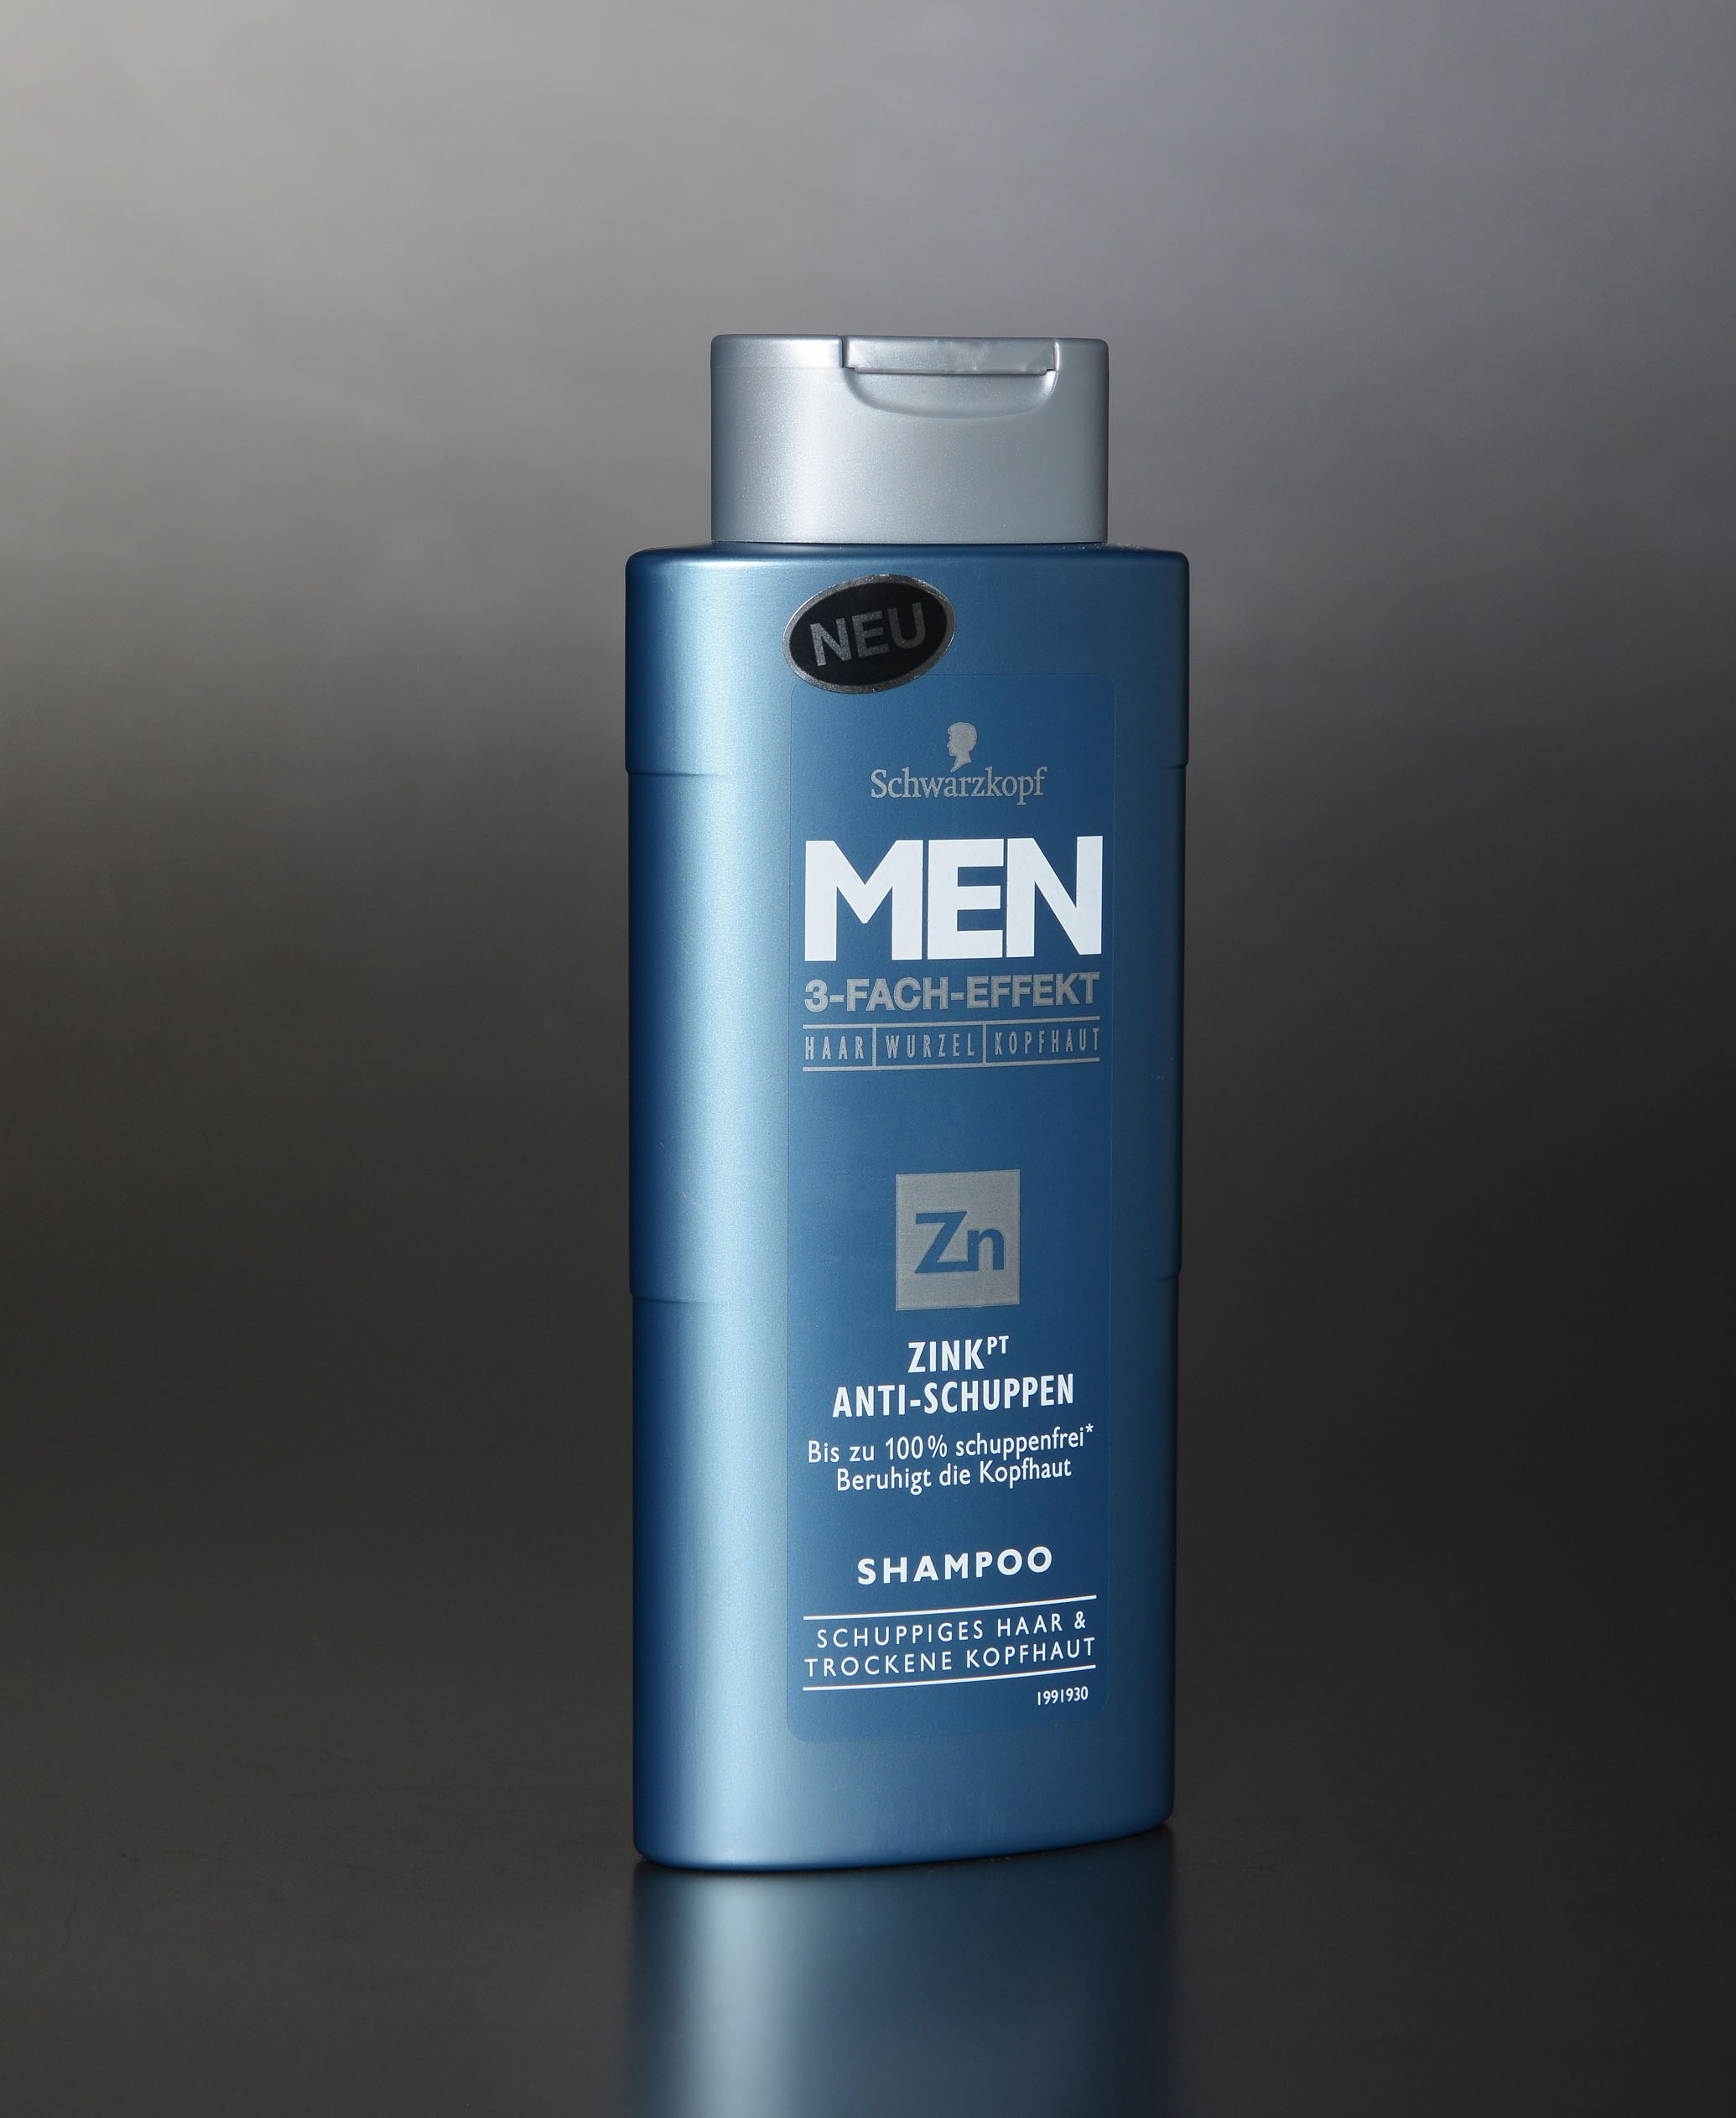 Tarief soep zadel RPC creates more for men with new shampoo bottle